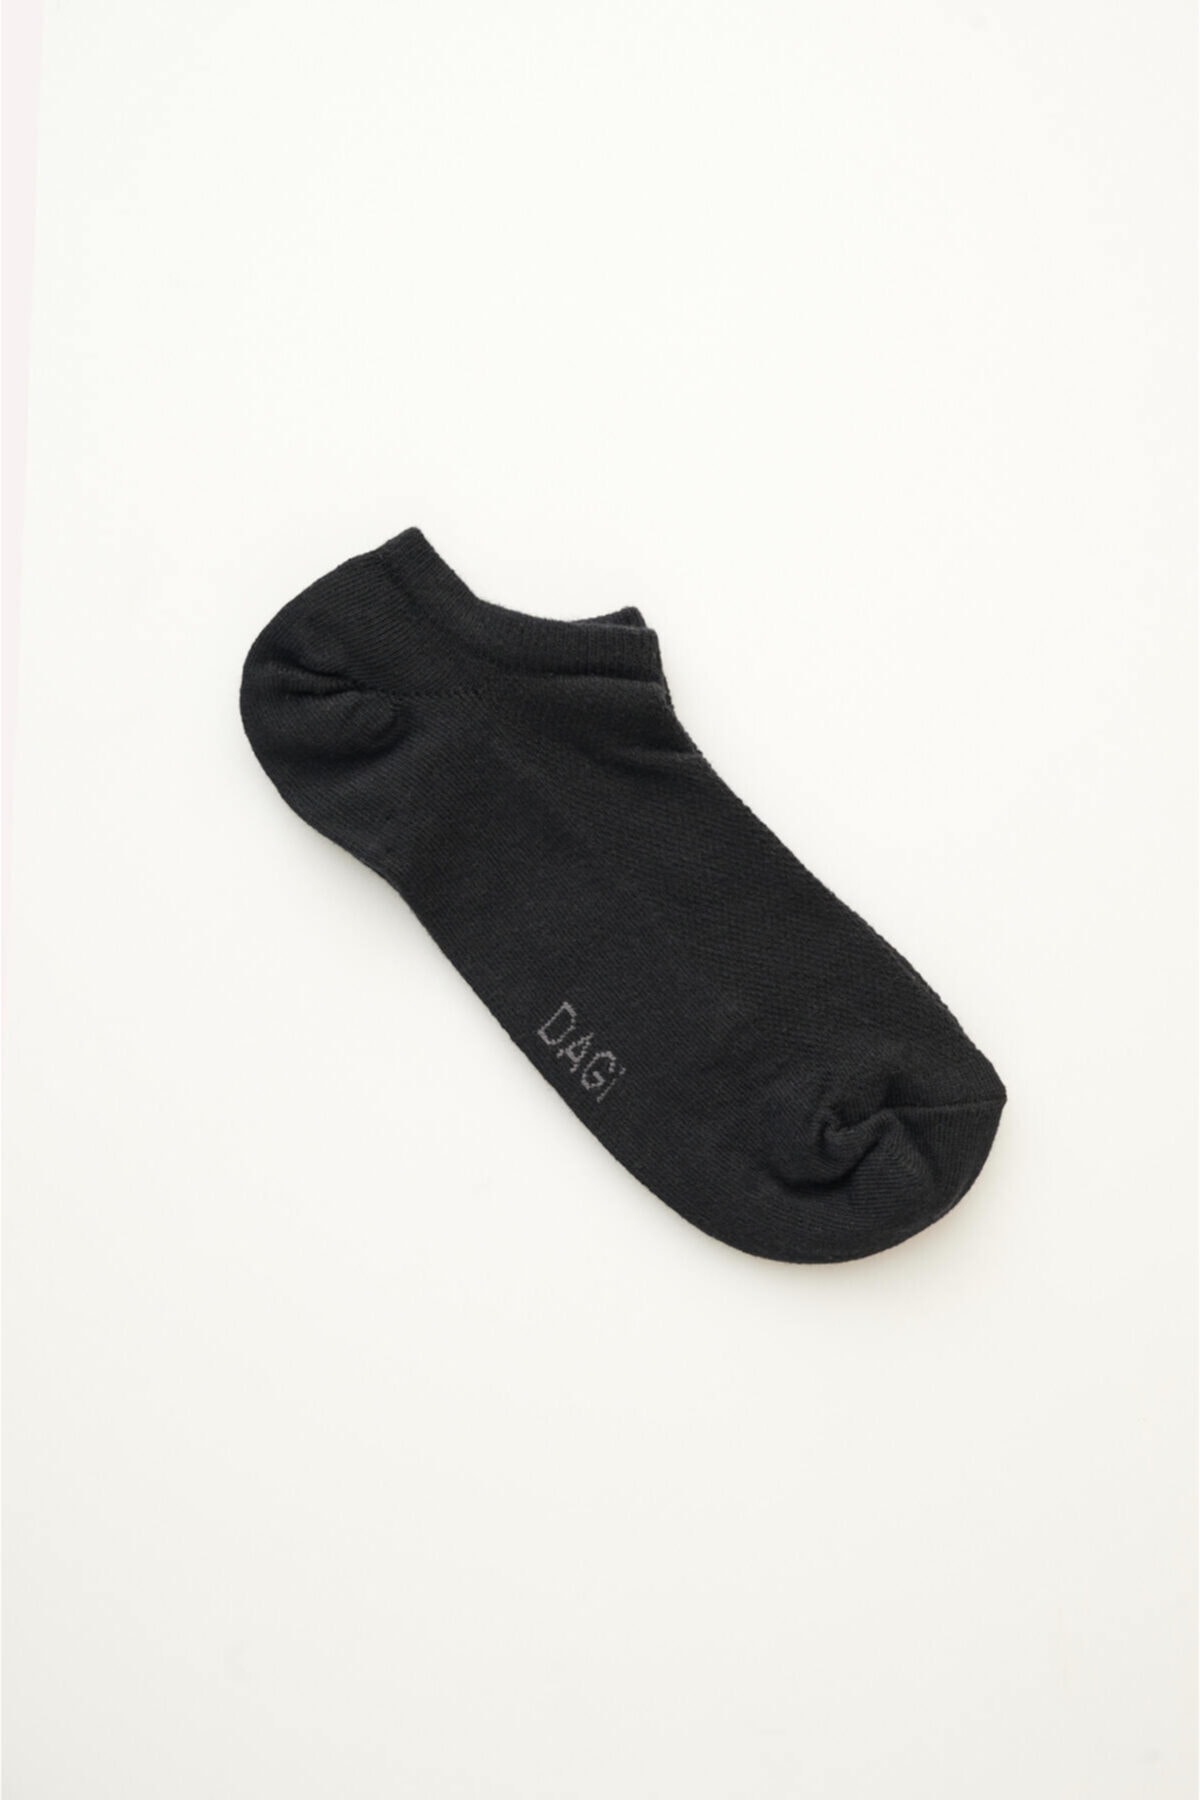 Dagi Black Men's Cotton Short Socks